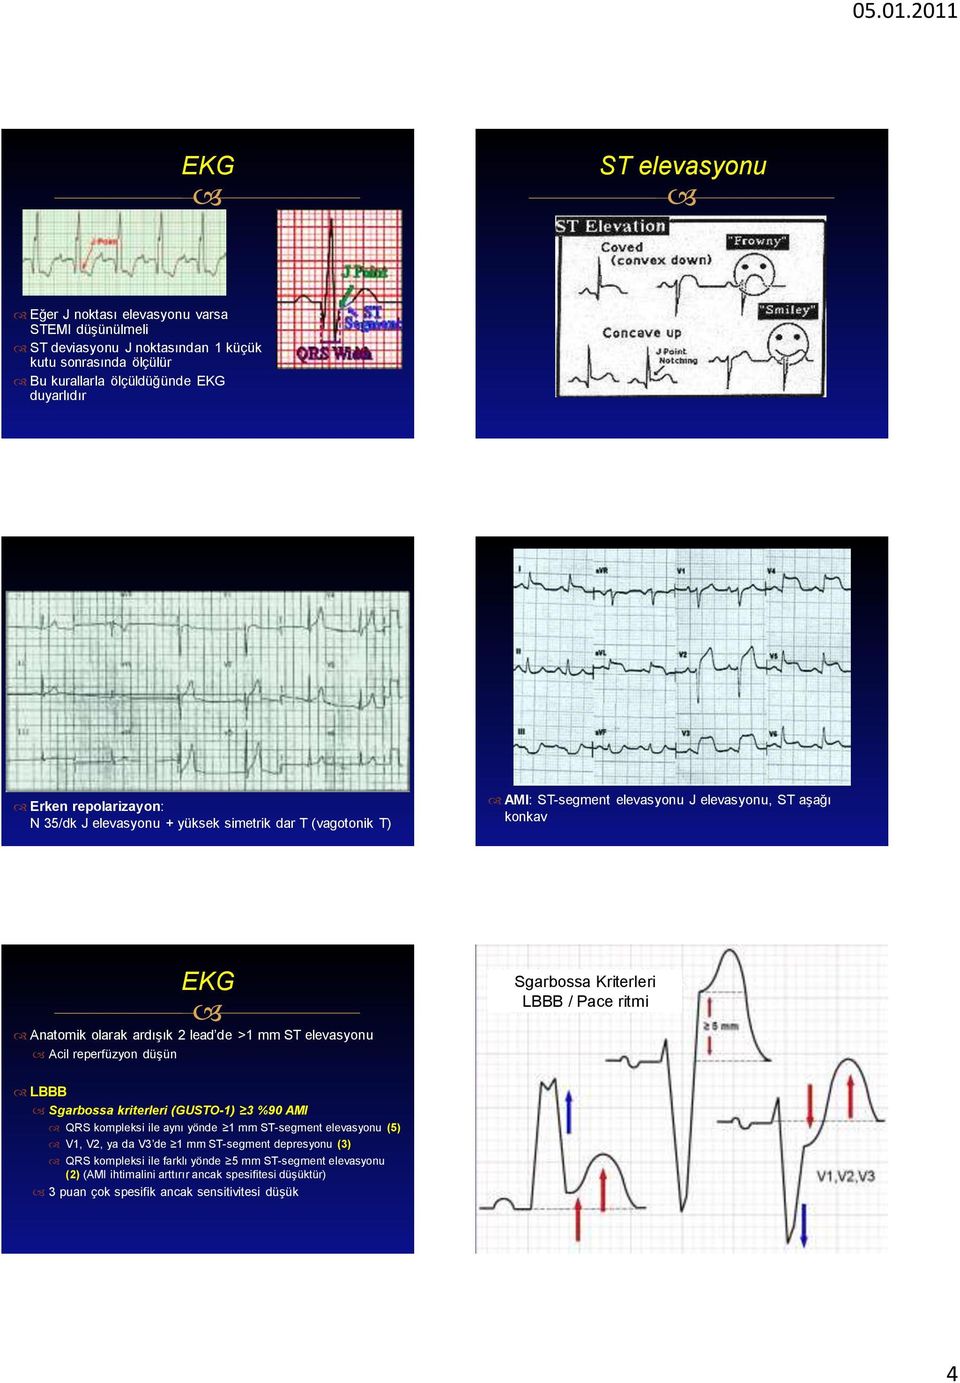 Acil reperfüzyon düşün EKG Sgarbossa Kriterleri LBBB / Pace ritmi LBBB Sgarbossa kriterleri (GUSTO-1) 3 %90 AMI QRS kompleksi ile aynı yönde 1 mm ST-segment elevasyonu (5) V1, V2, ya da